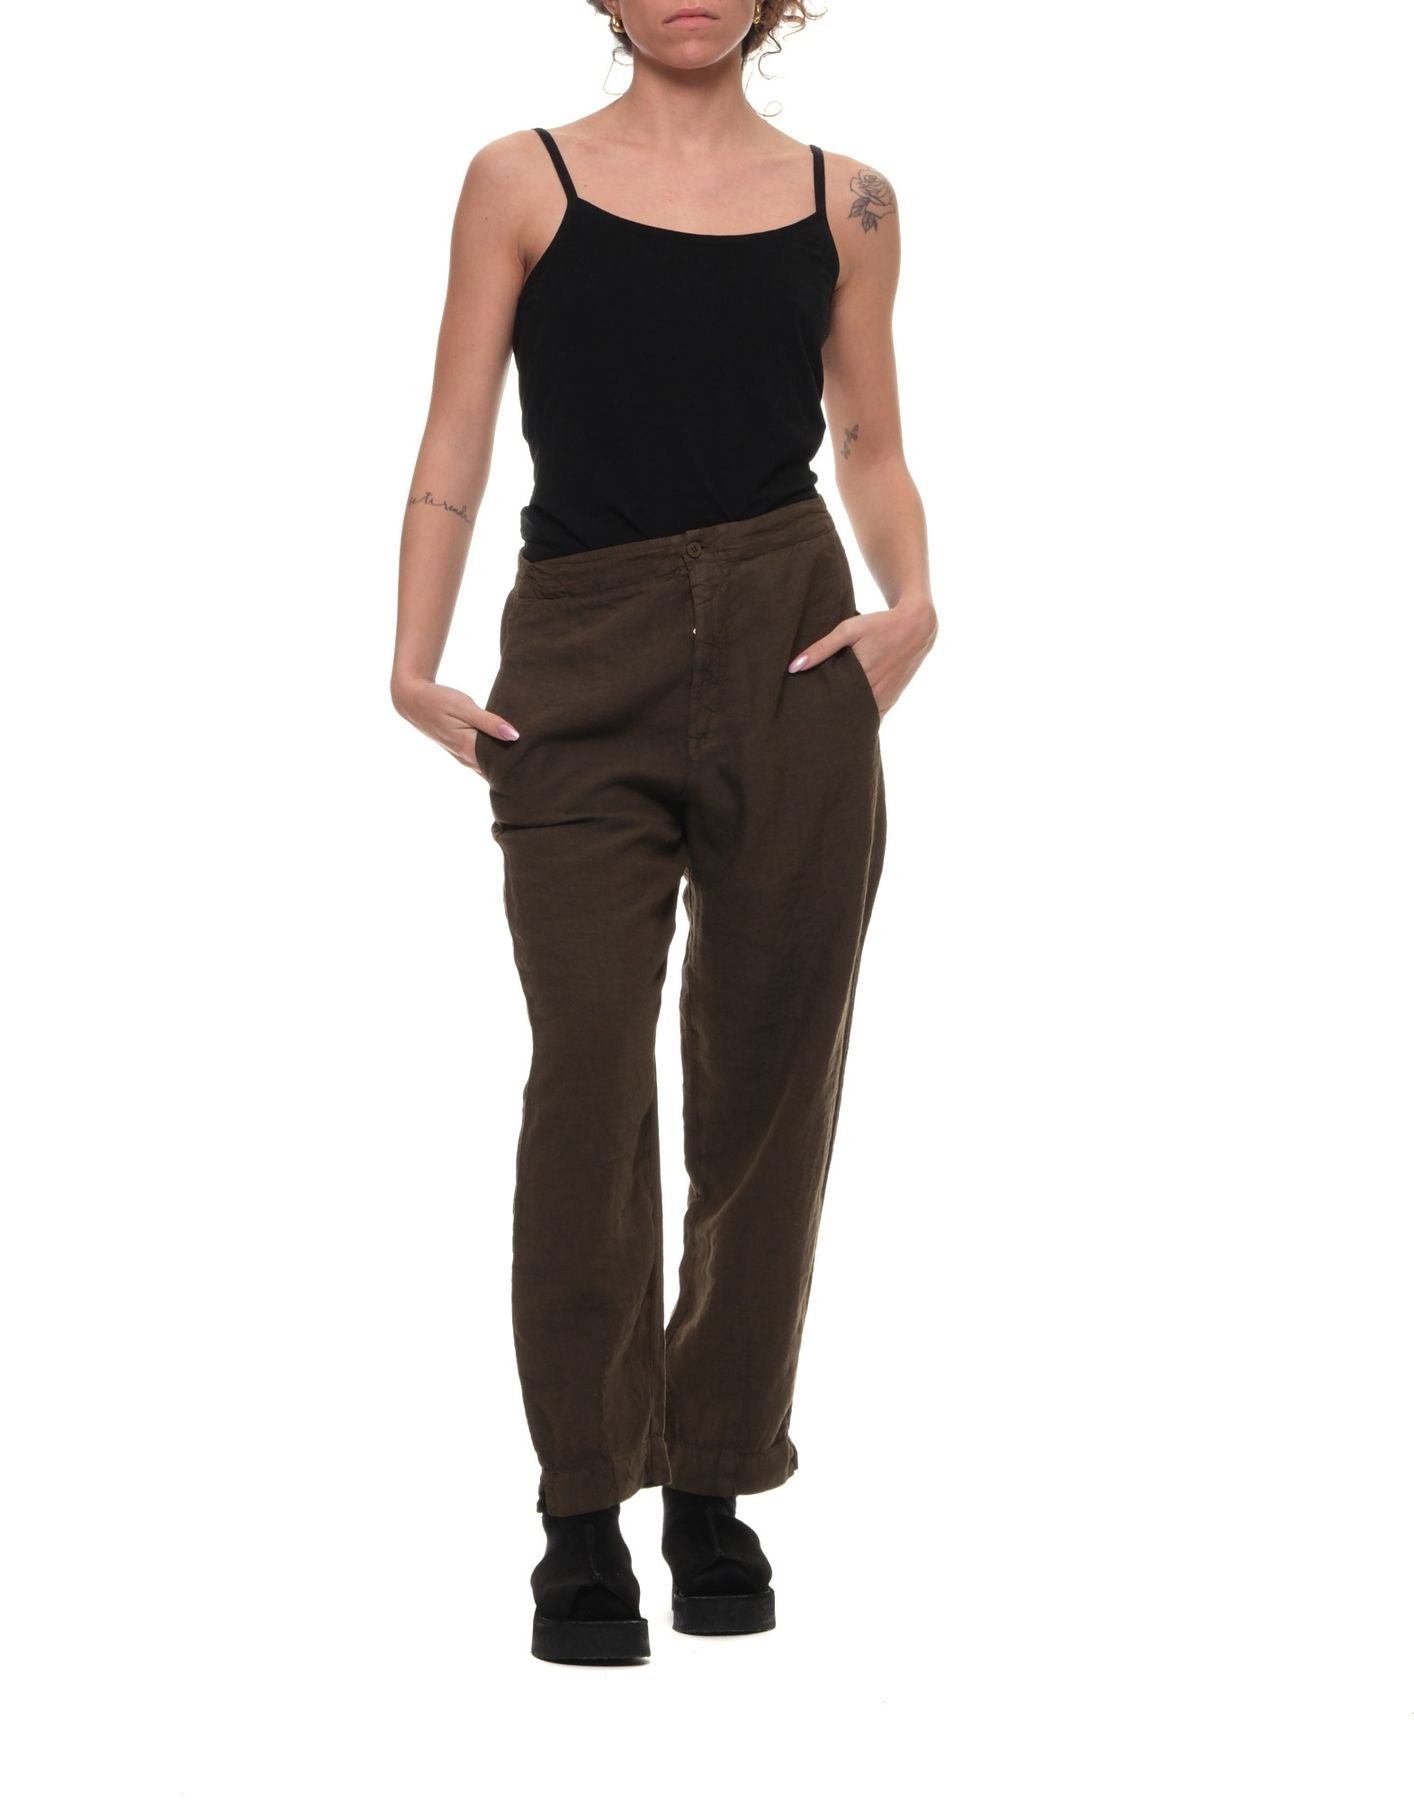 Pants for woman CFDTRWD132 06 TRANSIT